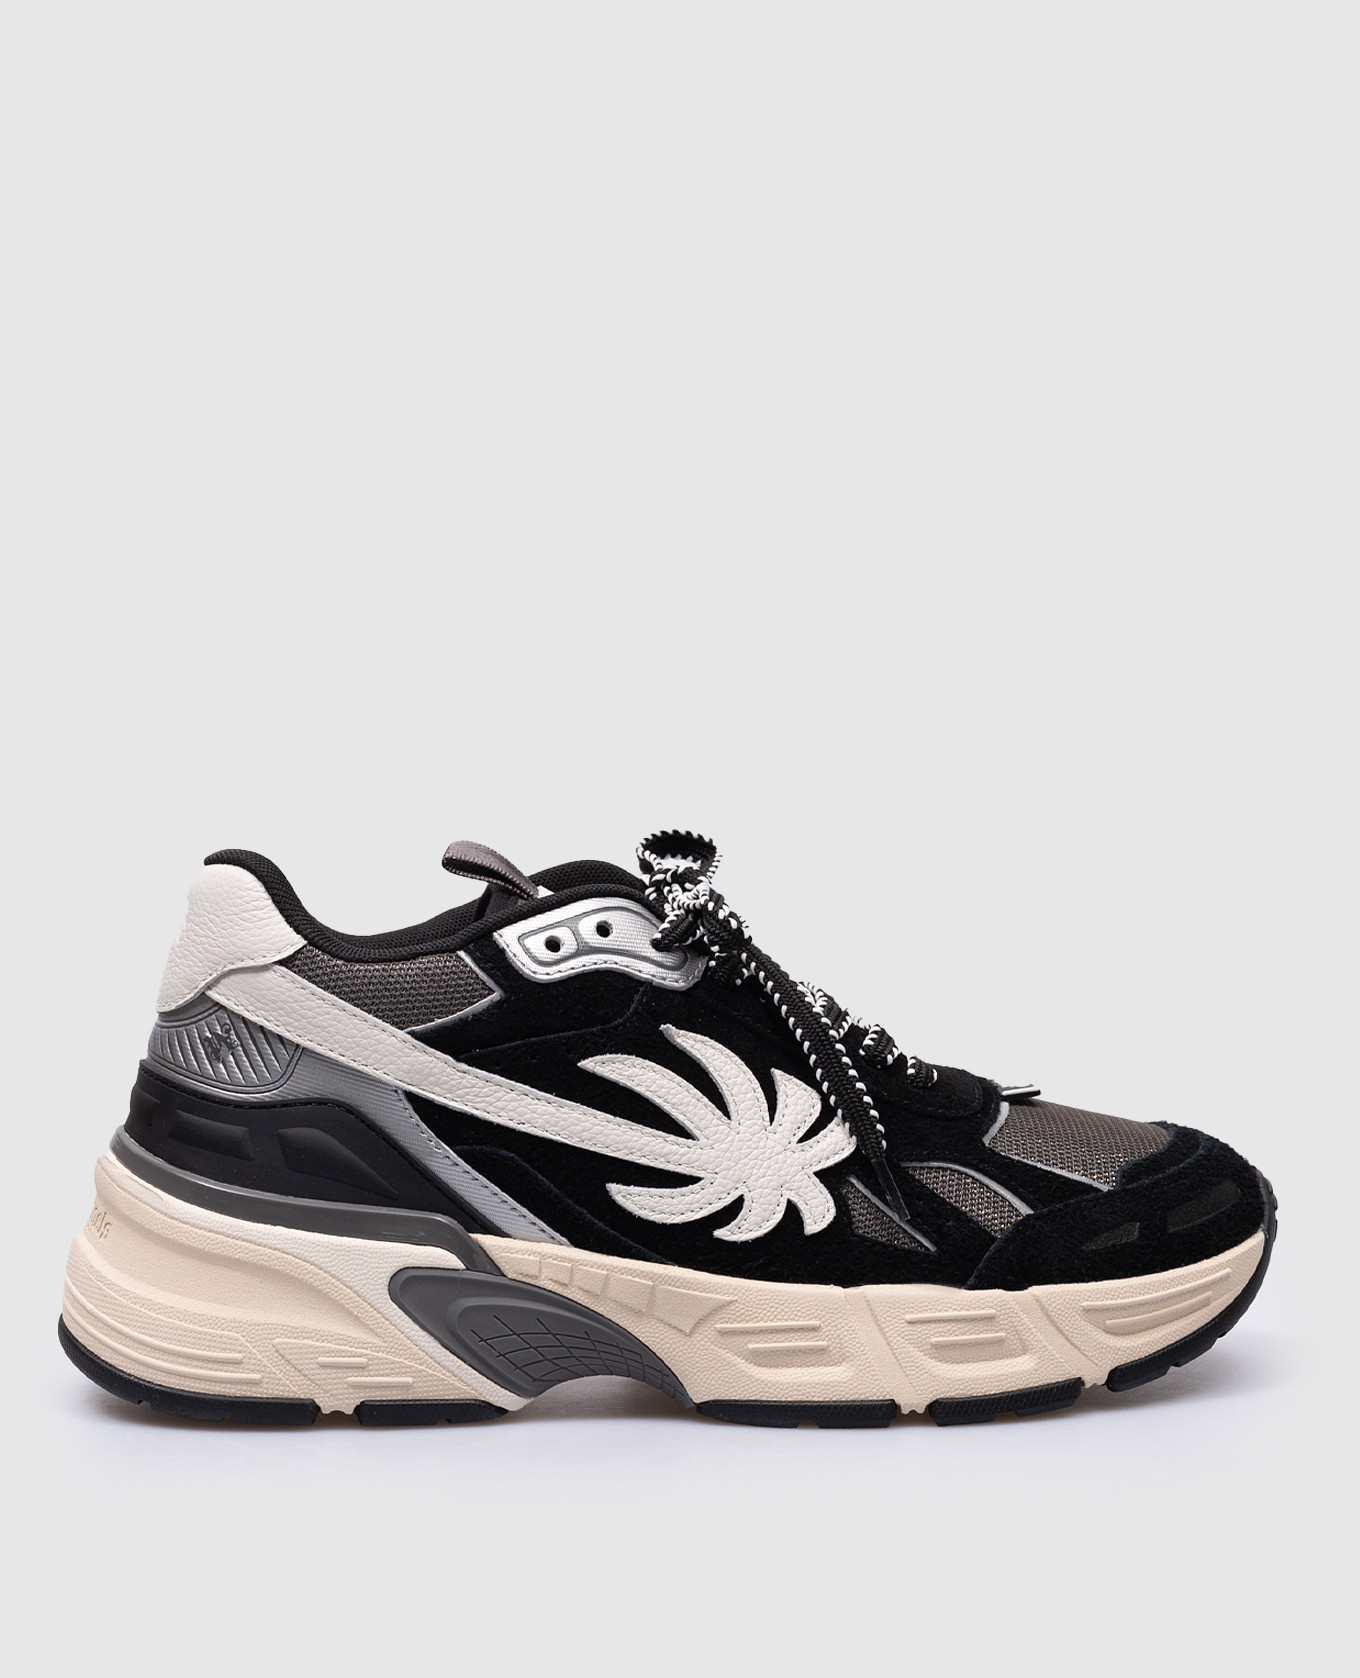 Black RA 4 combined sneakers